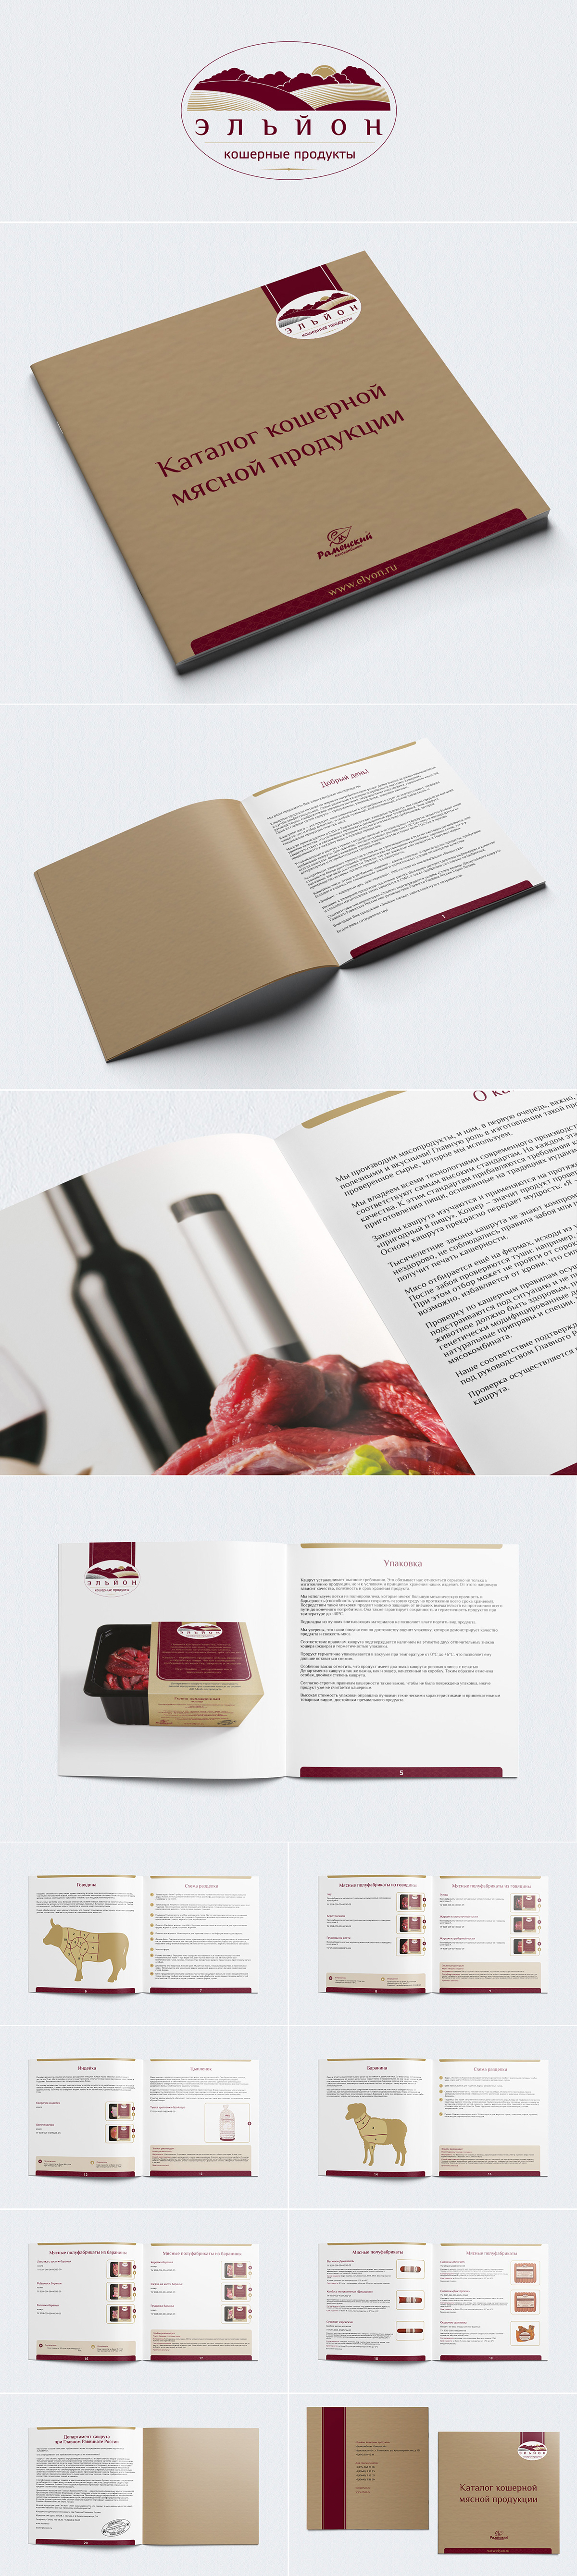 catalog meat print